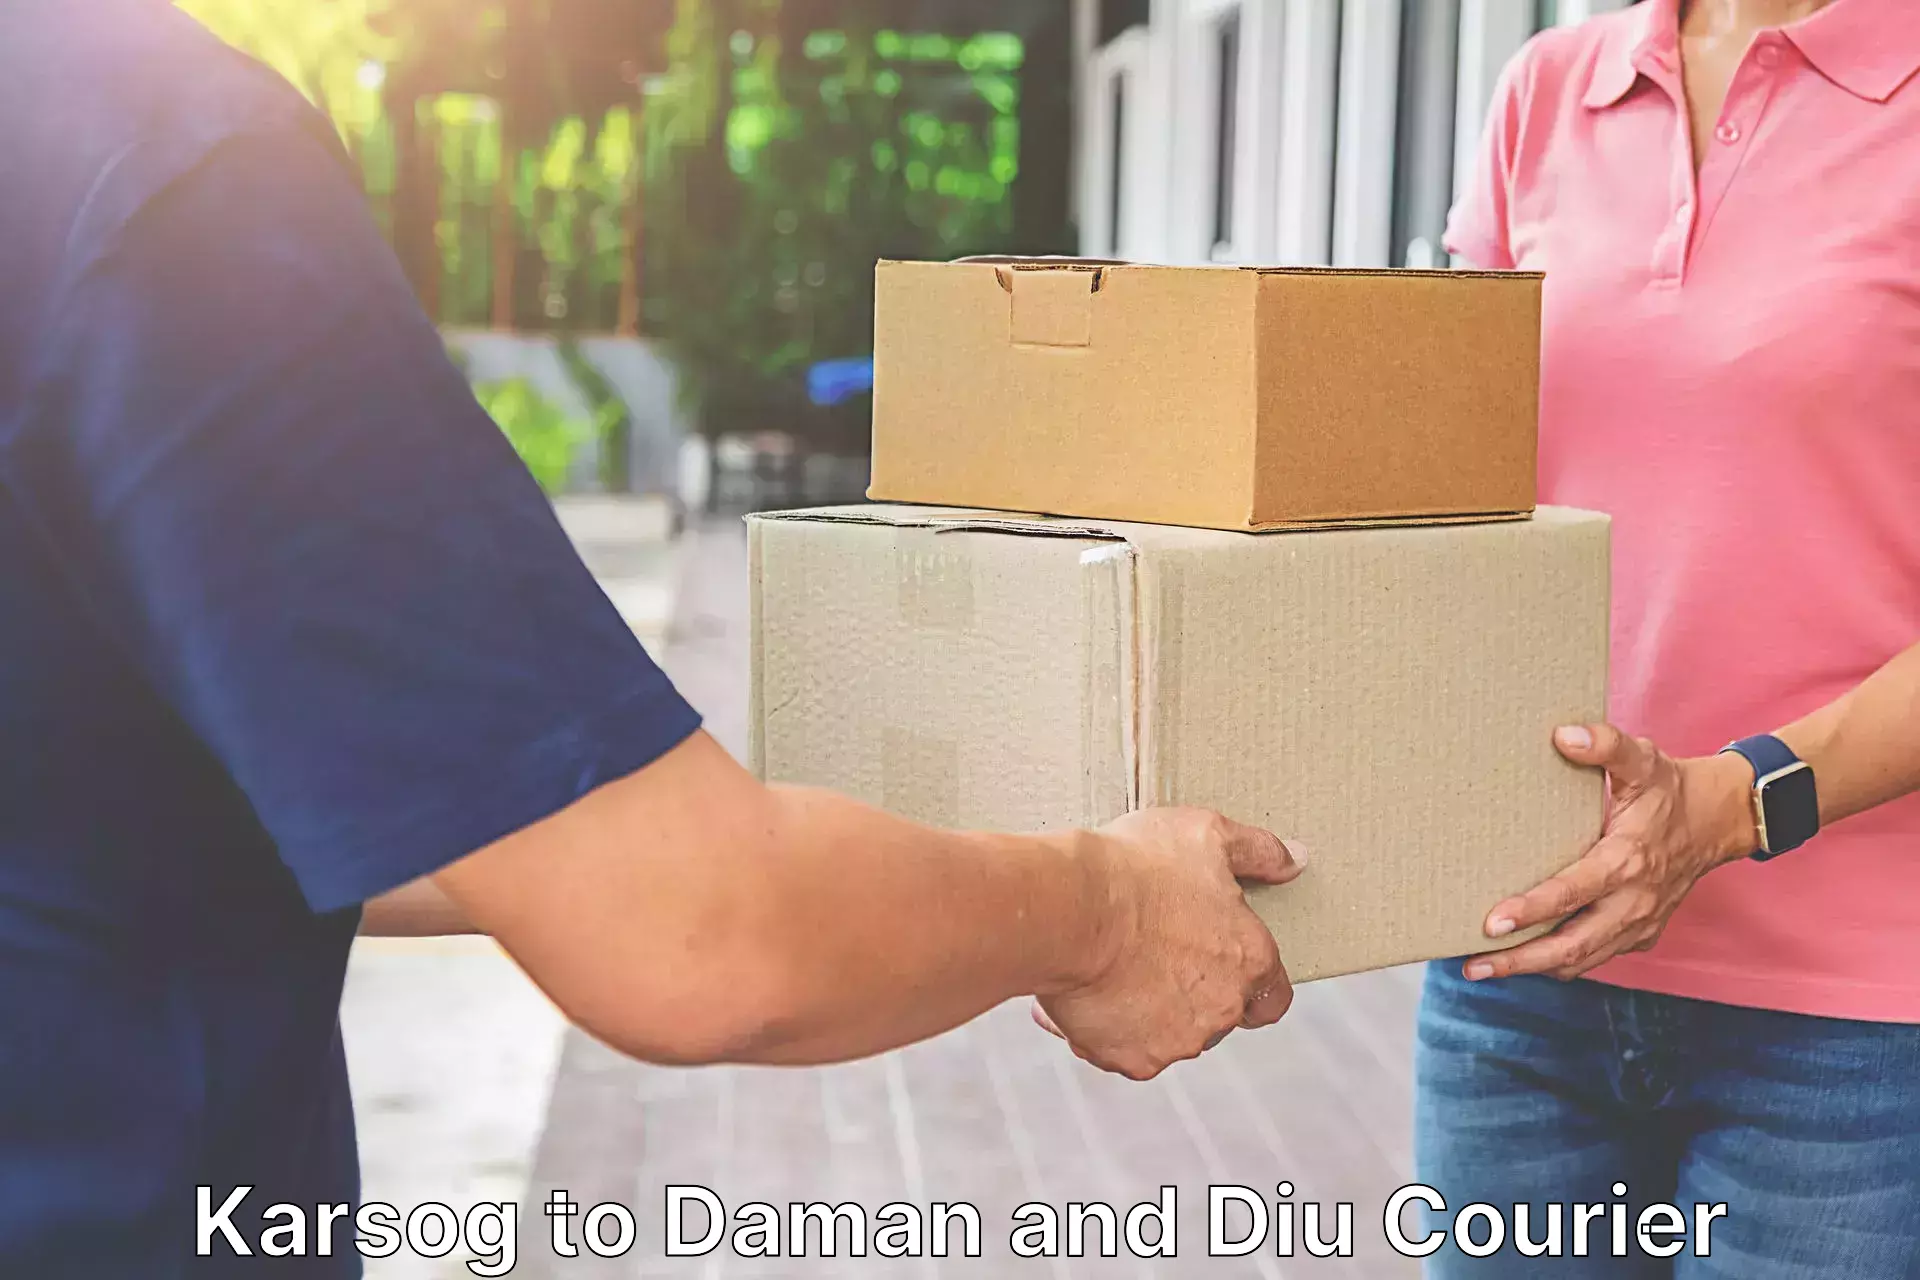 Courier service partnerships Karsog to Diu